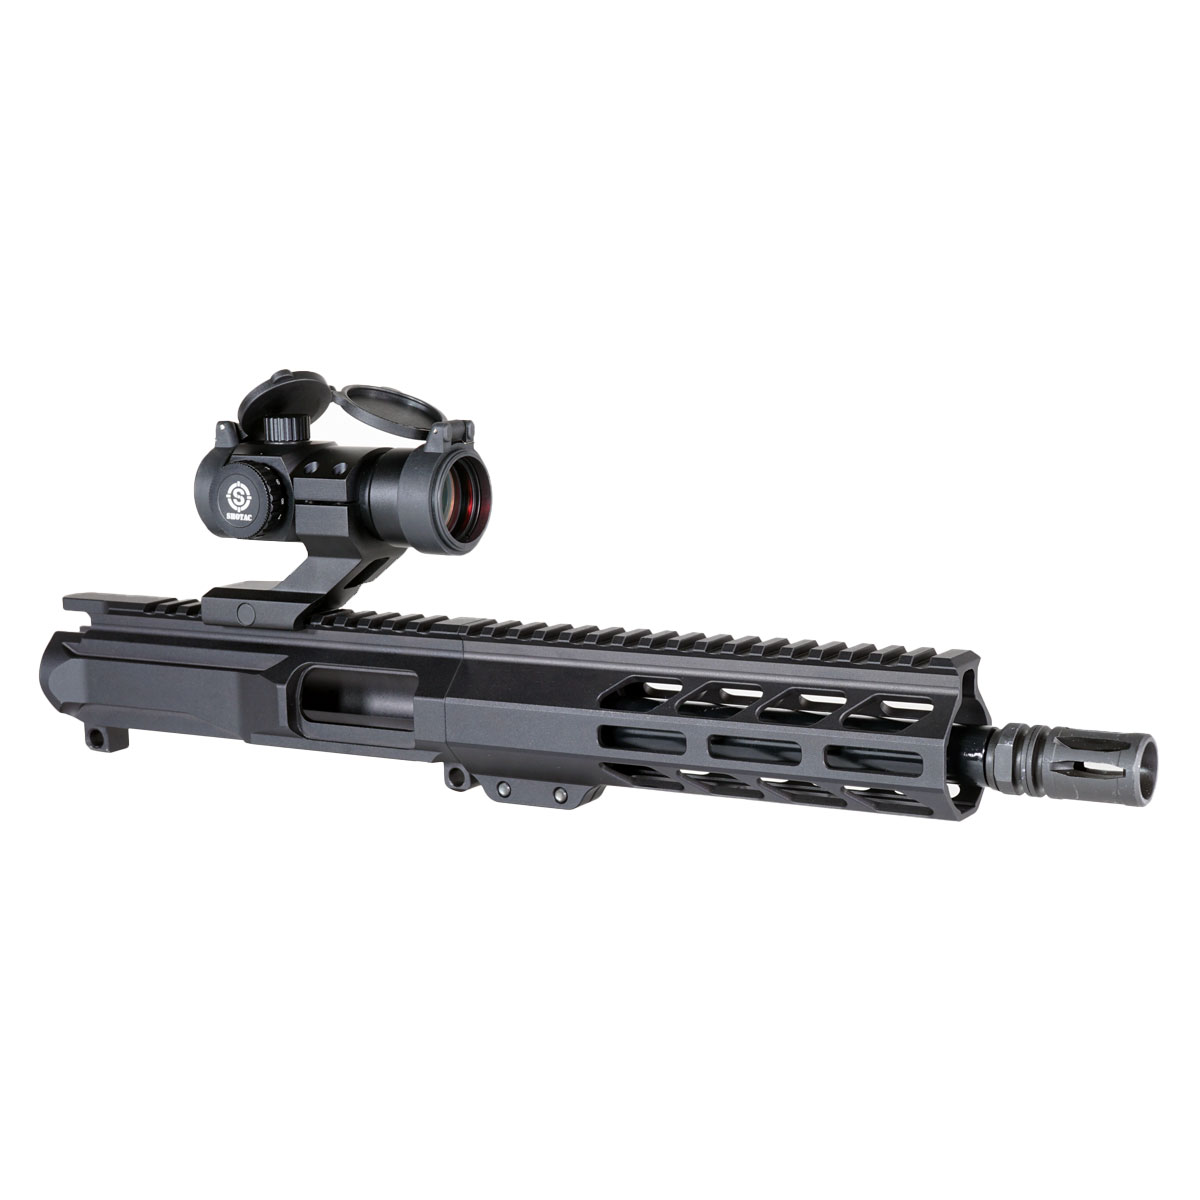 OTD 'Eternal Night Gen 2 w/ Shotac Cantilever' 8.5-inch AR-15 9mm Nitride Pistol Upper Build Kit